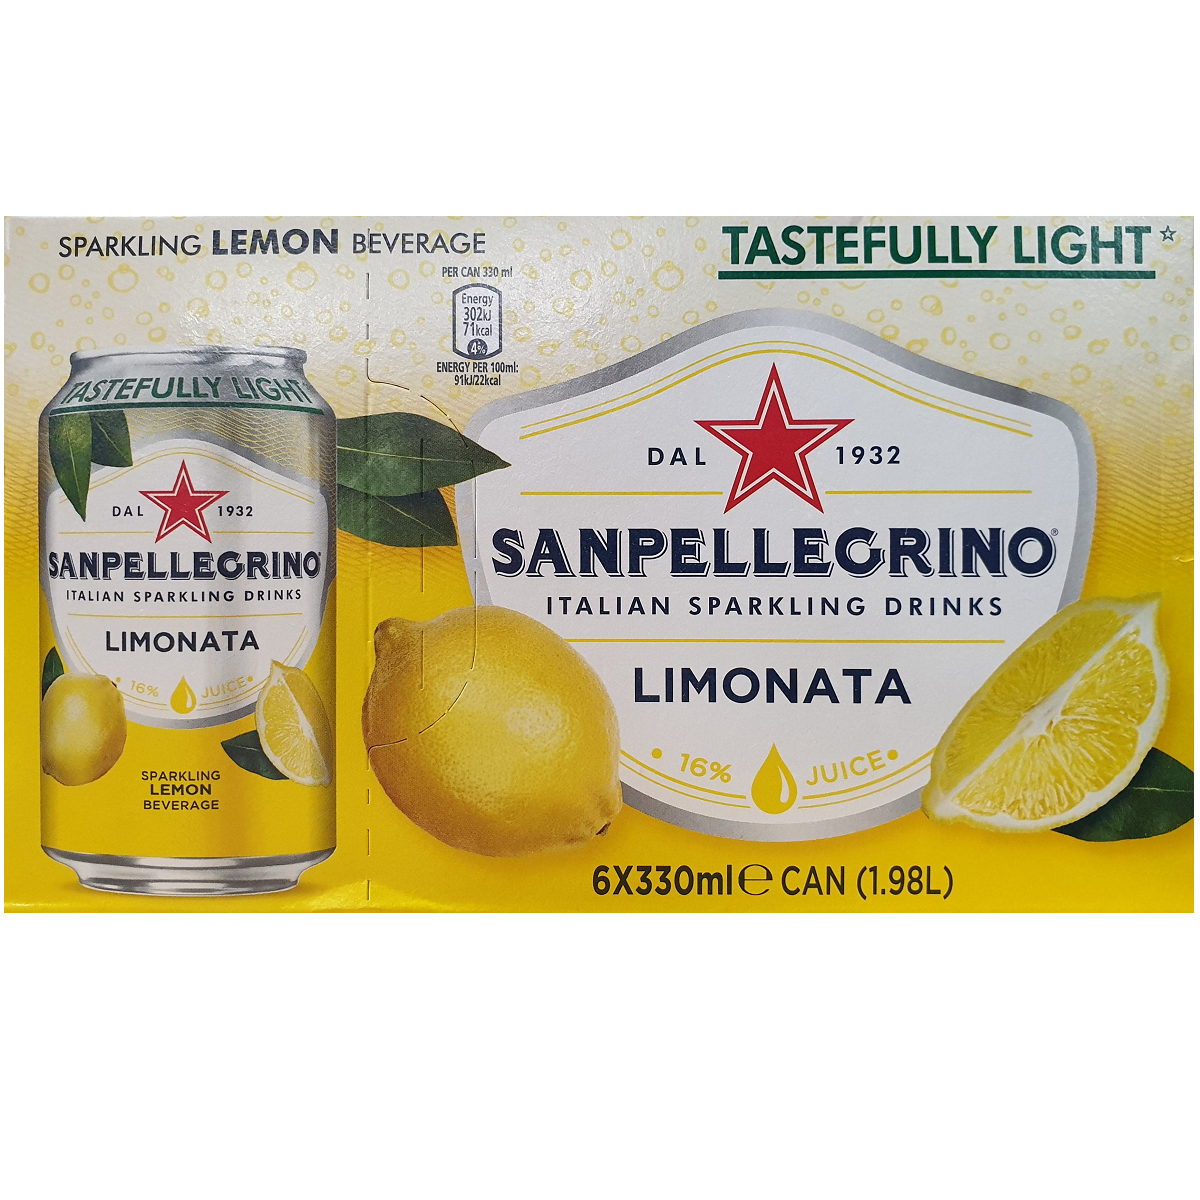 Sanpellegrino Italian Sparkling Drinks Limonata 6x330ml